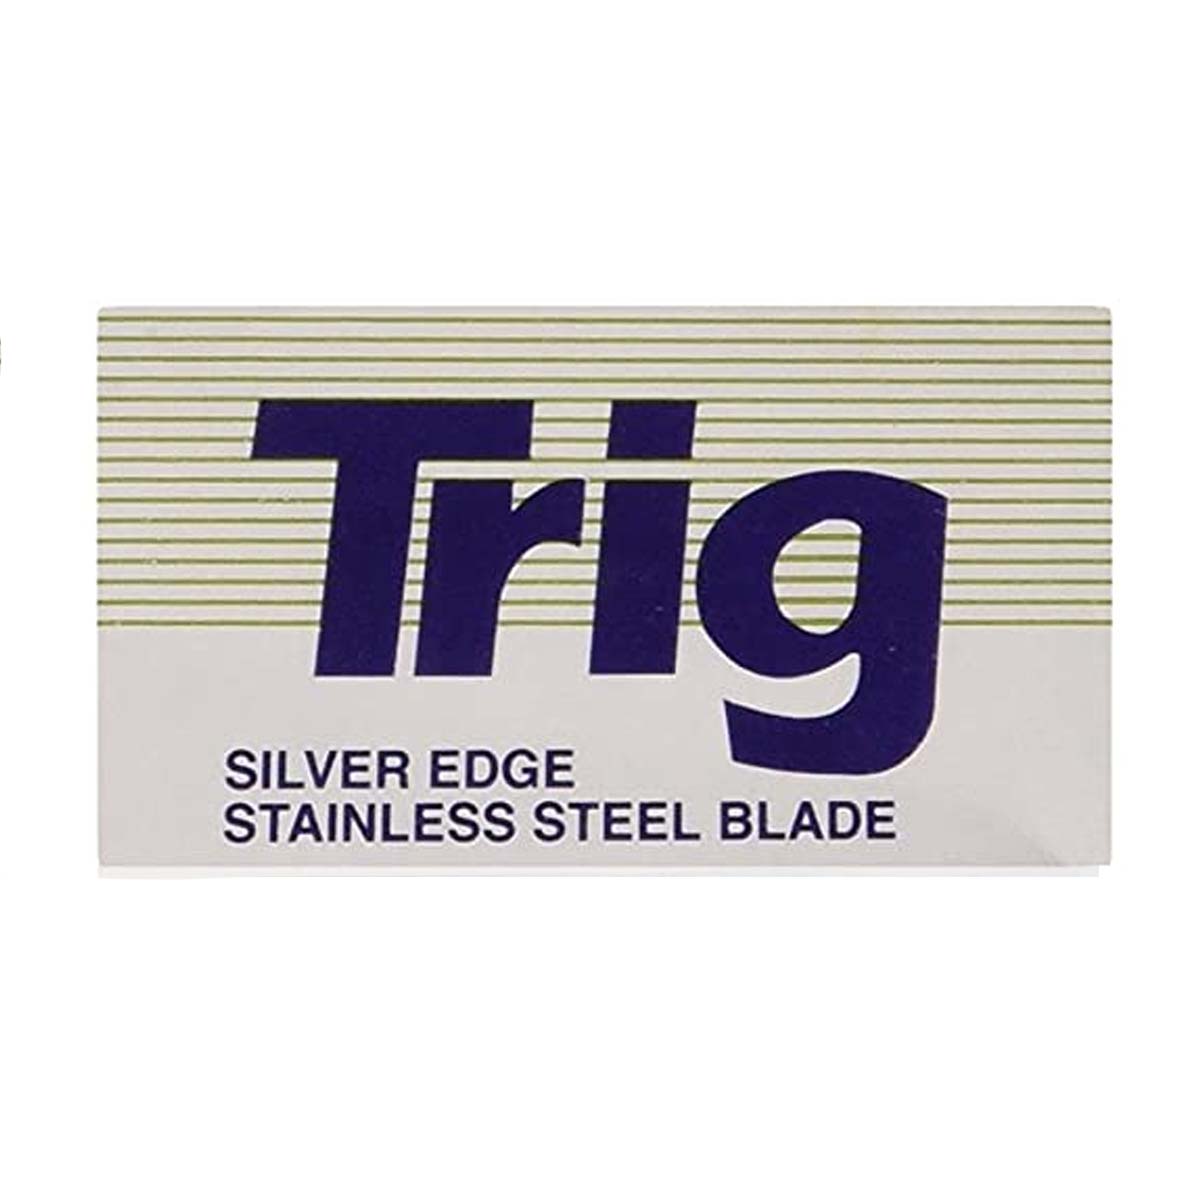 Treet Carbon Steel Double Edge Razor Blades (10 Blade Pack)